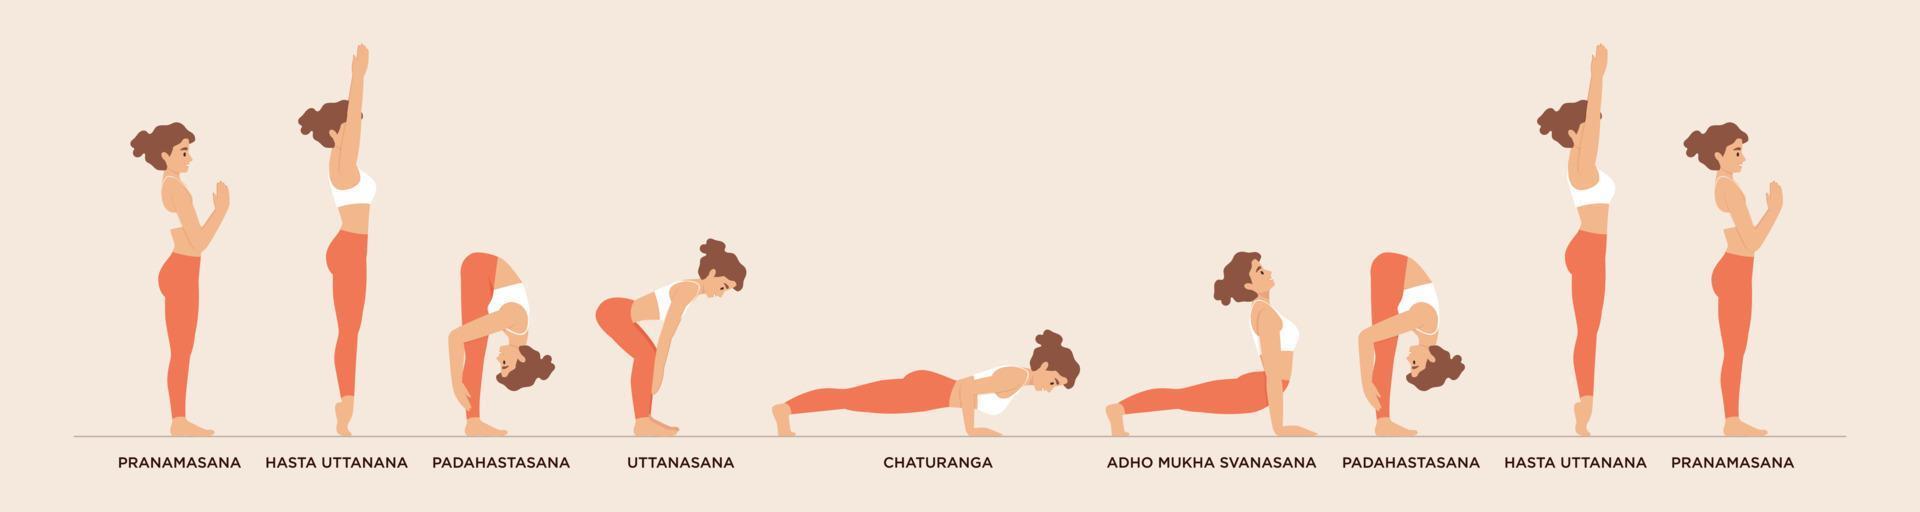 Ashtanga Yoga Primary Series Asanas With Name Image and Technique